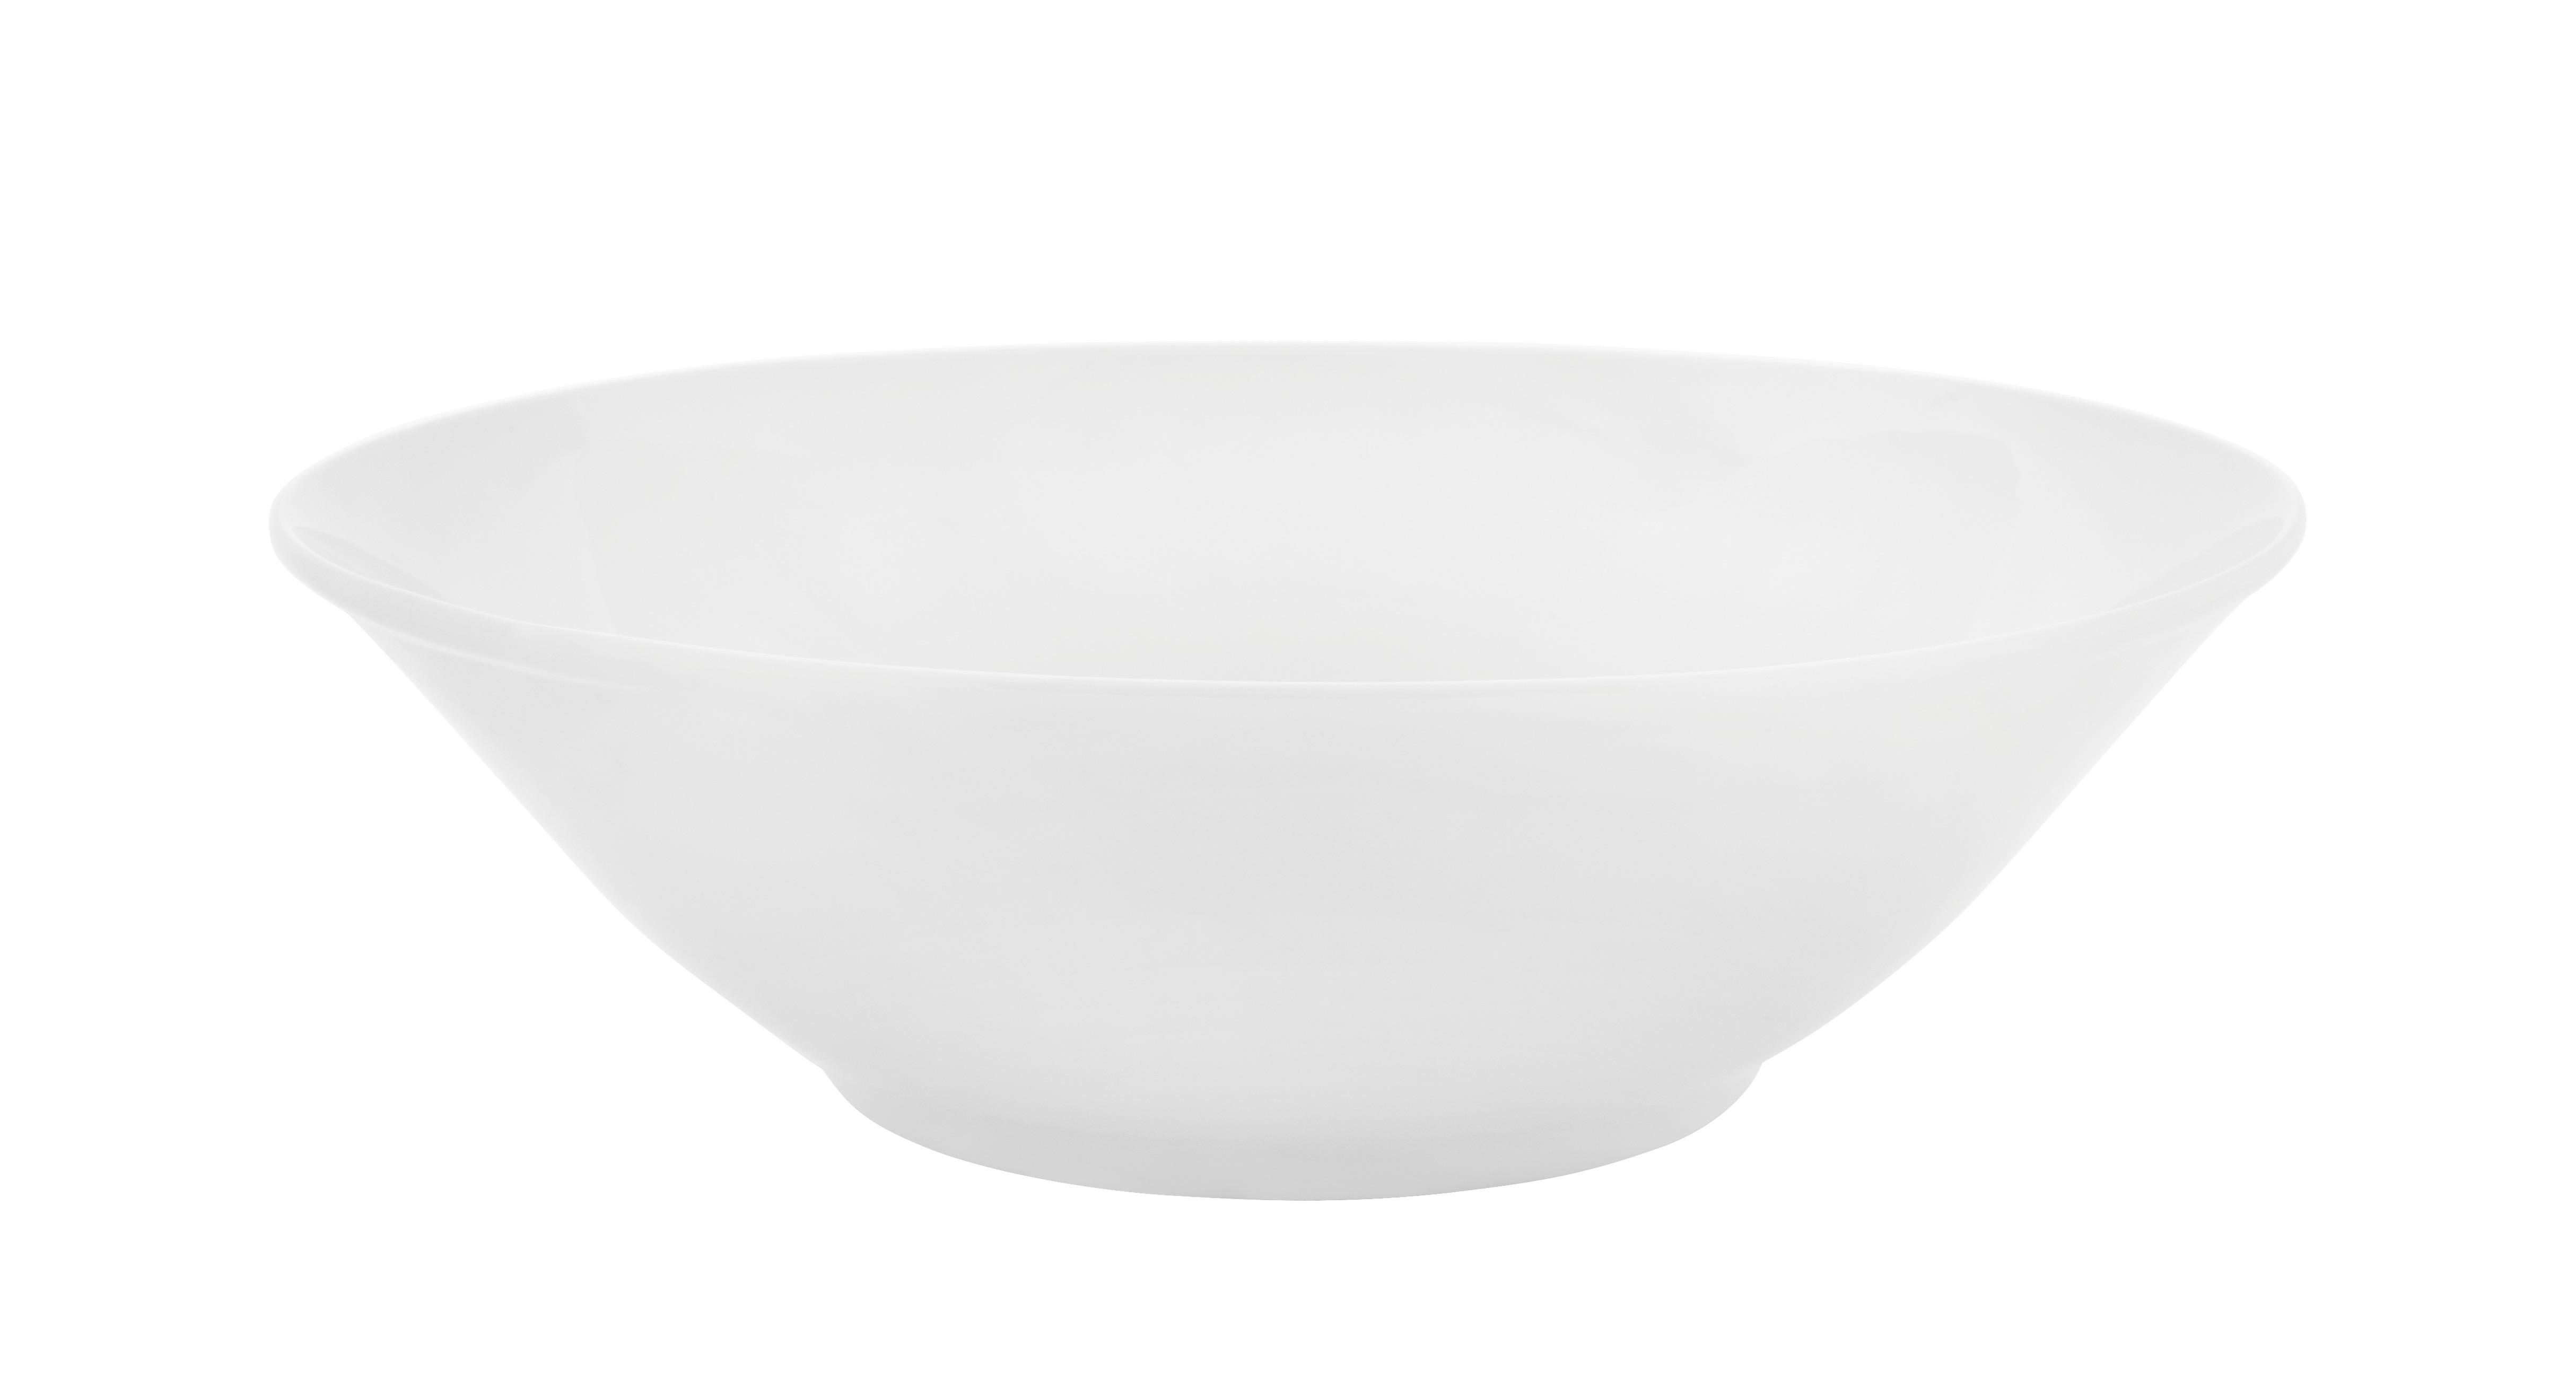 Salátová Mísa Adria - bílá, Konvenční, keramika (23cm) - Modern Living